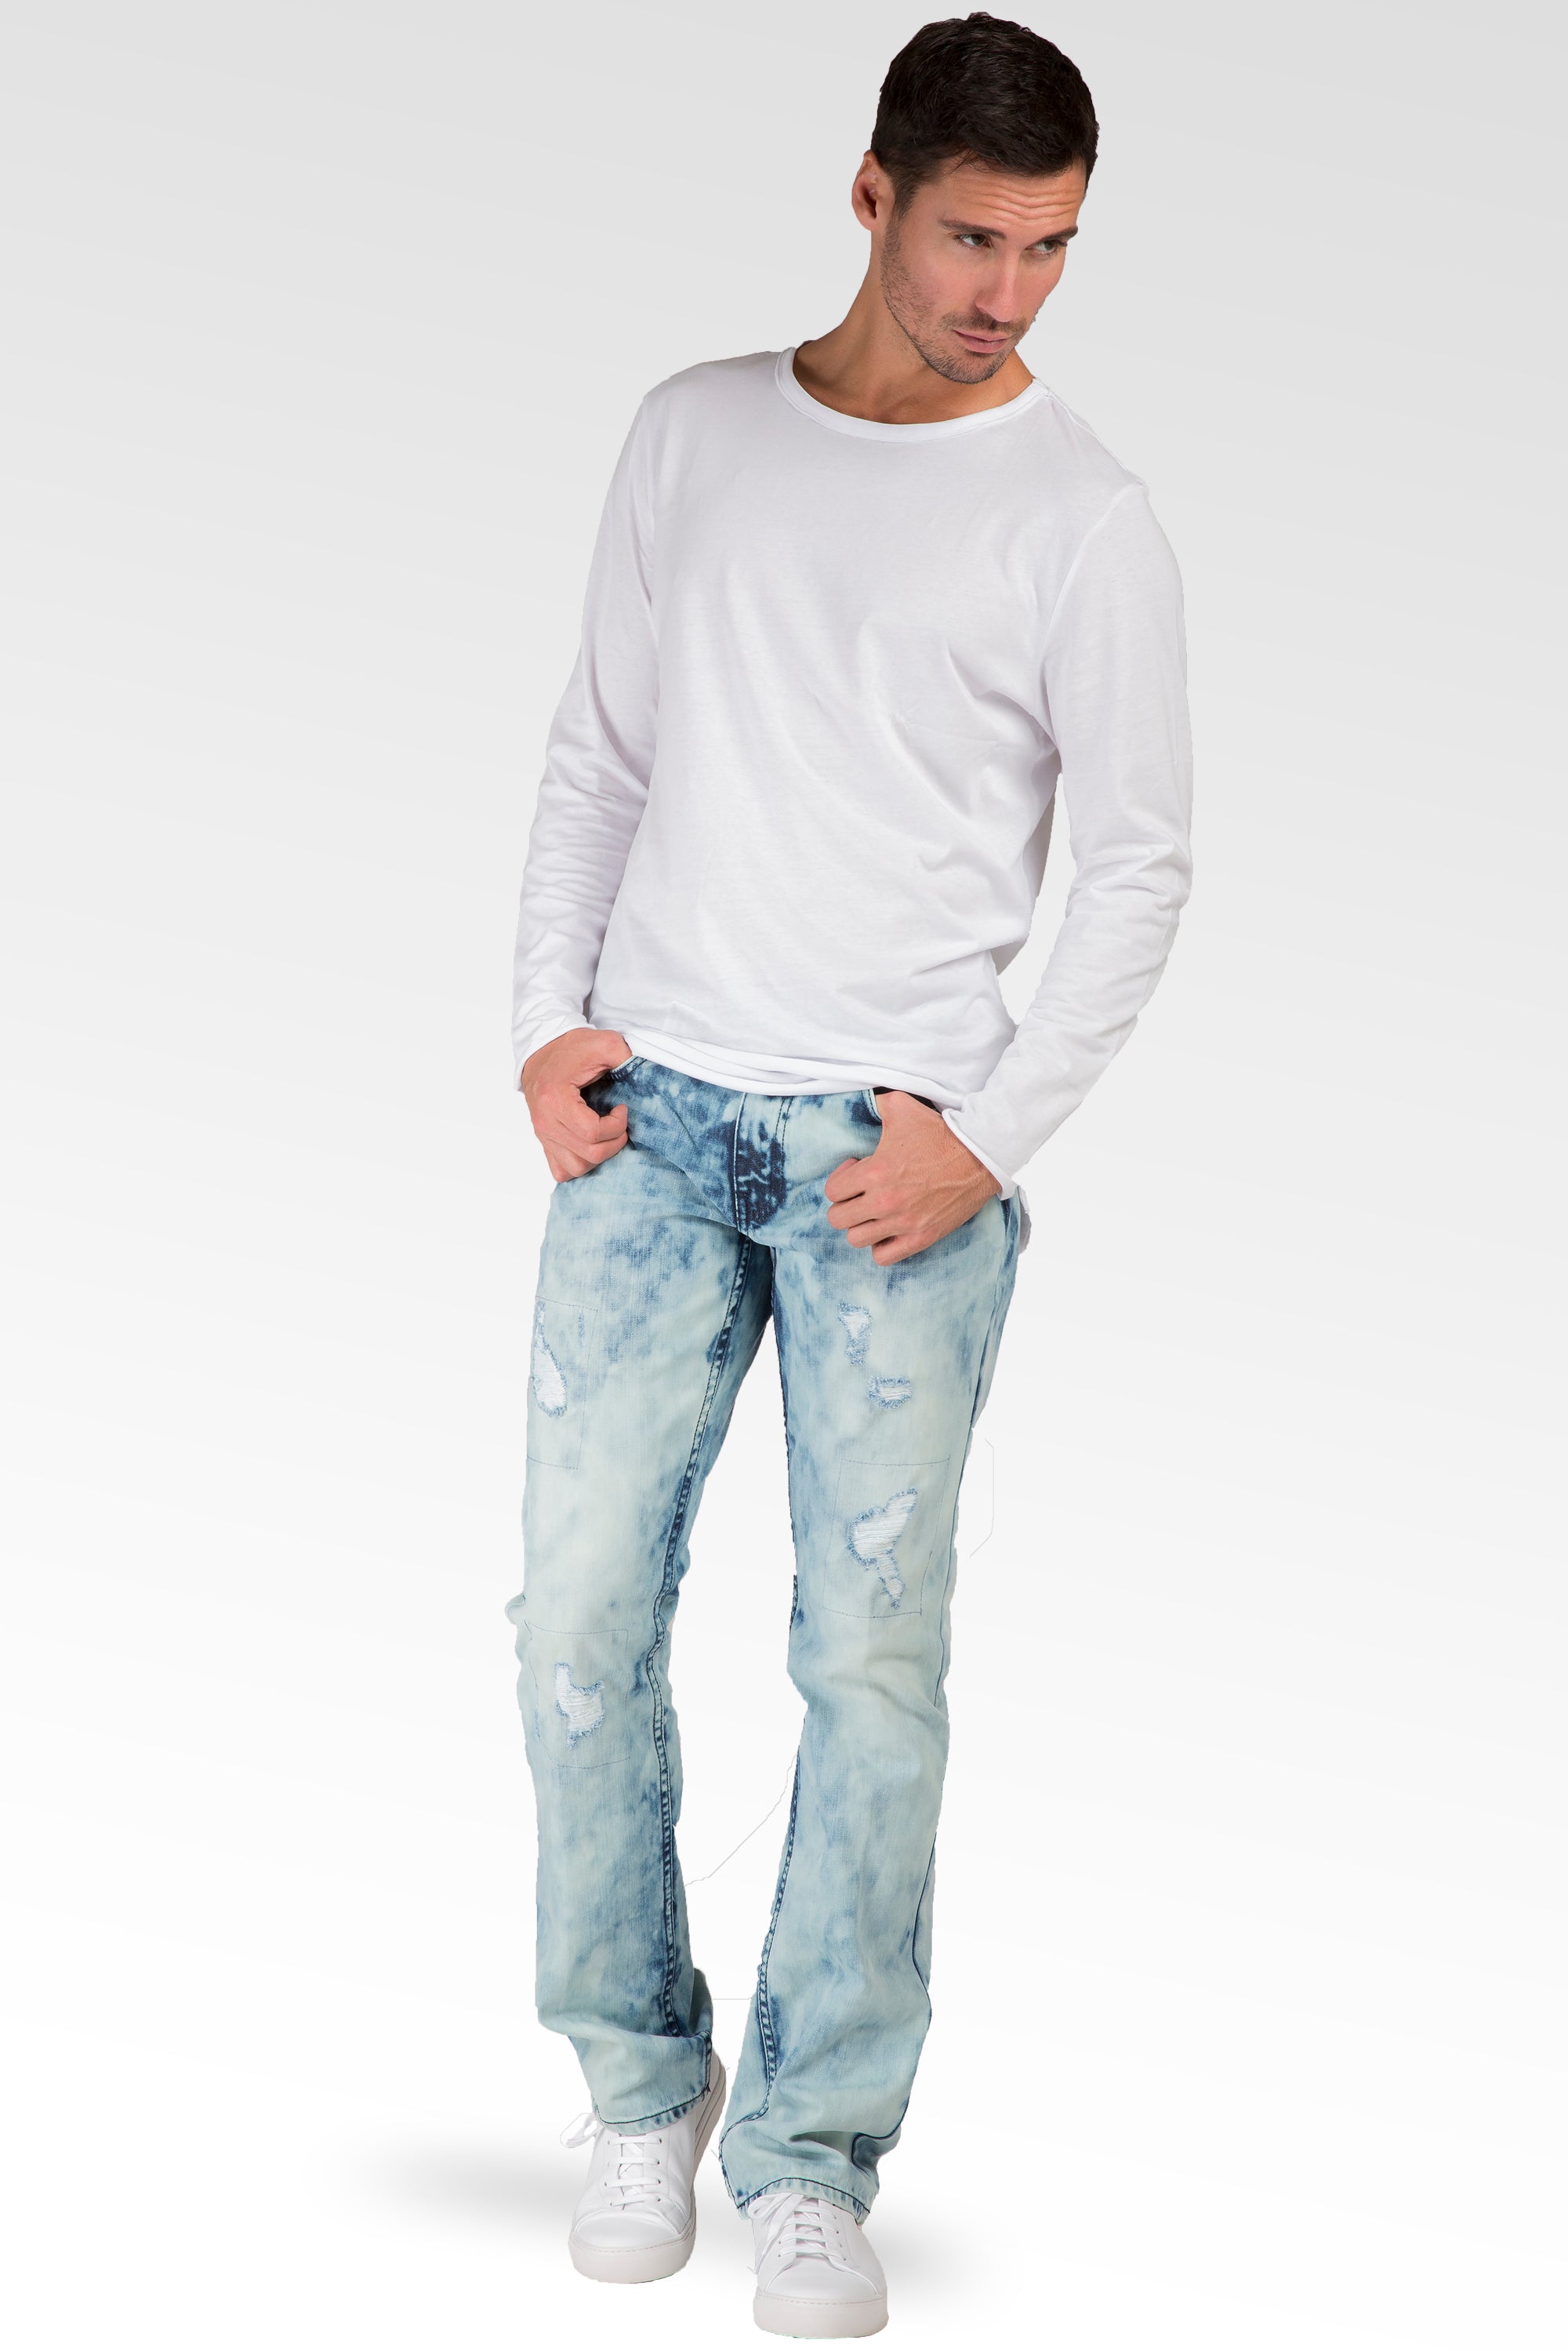 Level 7 Men's Slim Straight Ripped & Repaired Acid Wash 5 Pocket Jeans  Premium Denim – Level 7 Jeans